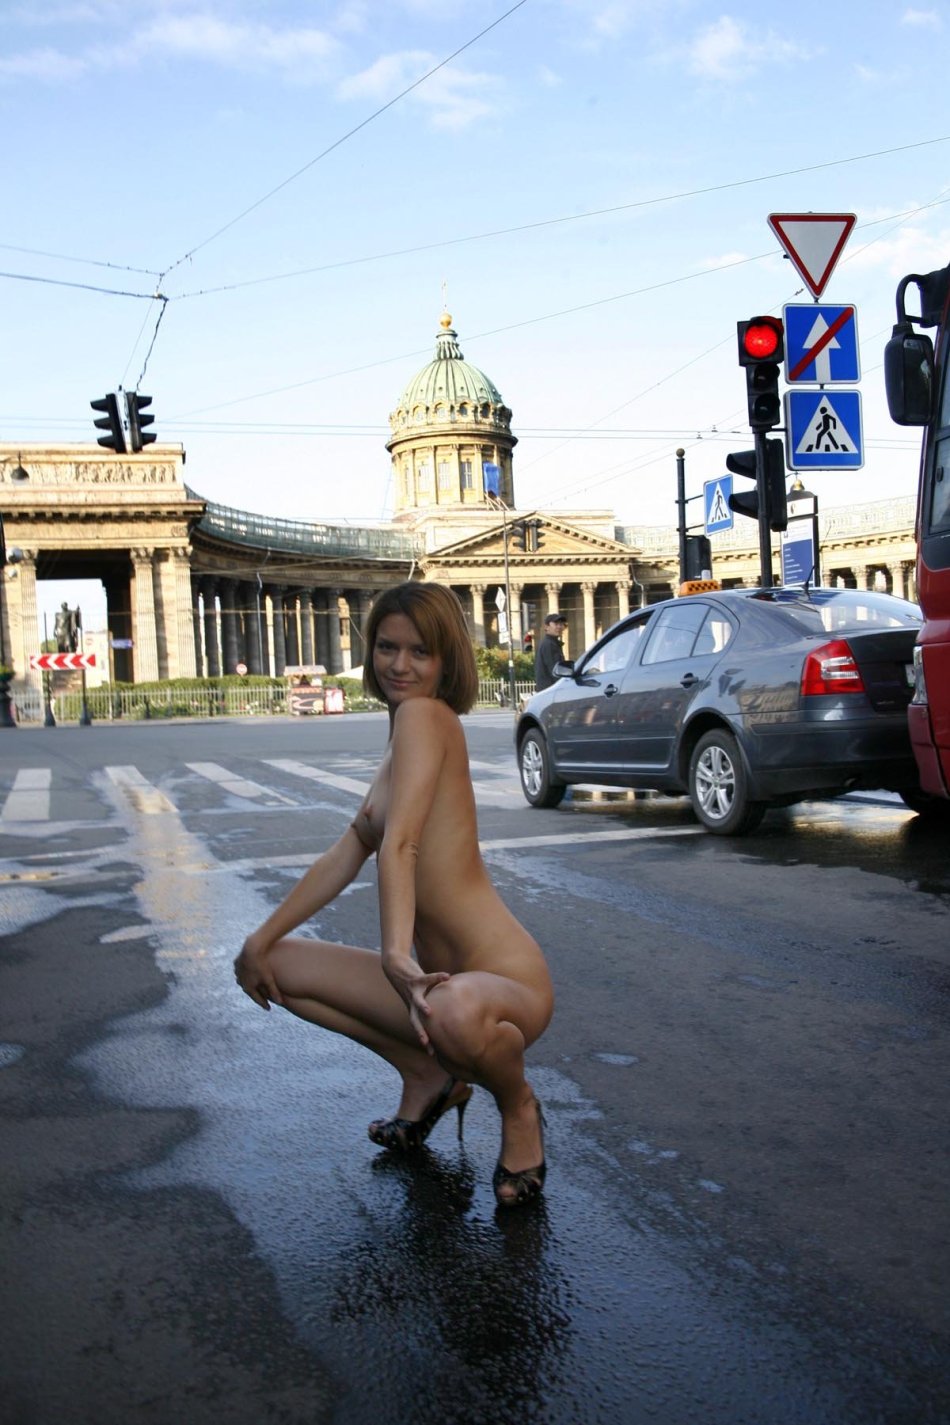 Шлюхи петербурга (89 фото) - секс фото